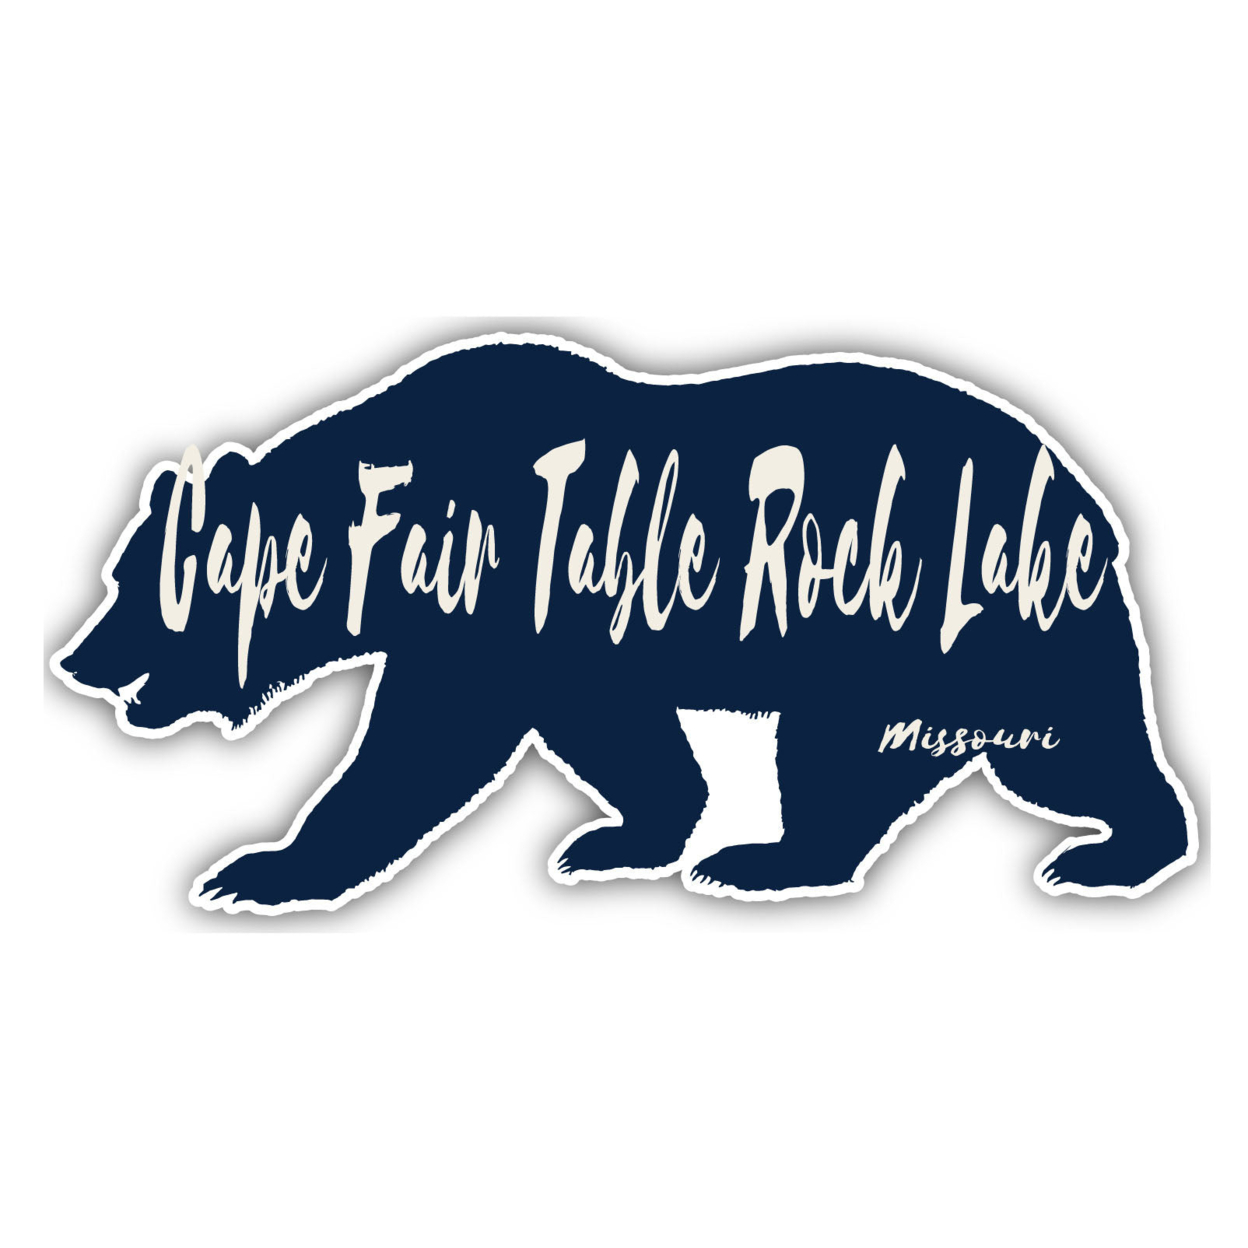 Cape Fair Table Rock Lake Missouri Souvenir Decorative Stickers (Choose Theme And Size) - 4-Pack, 4-Inch, Bear